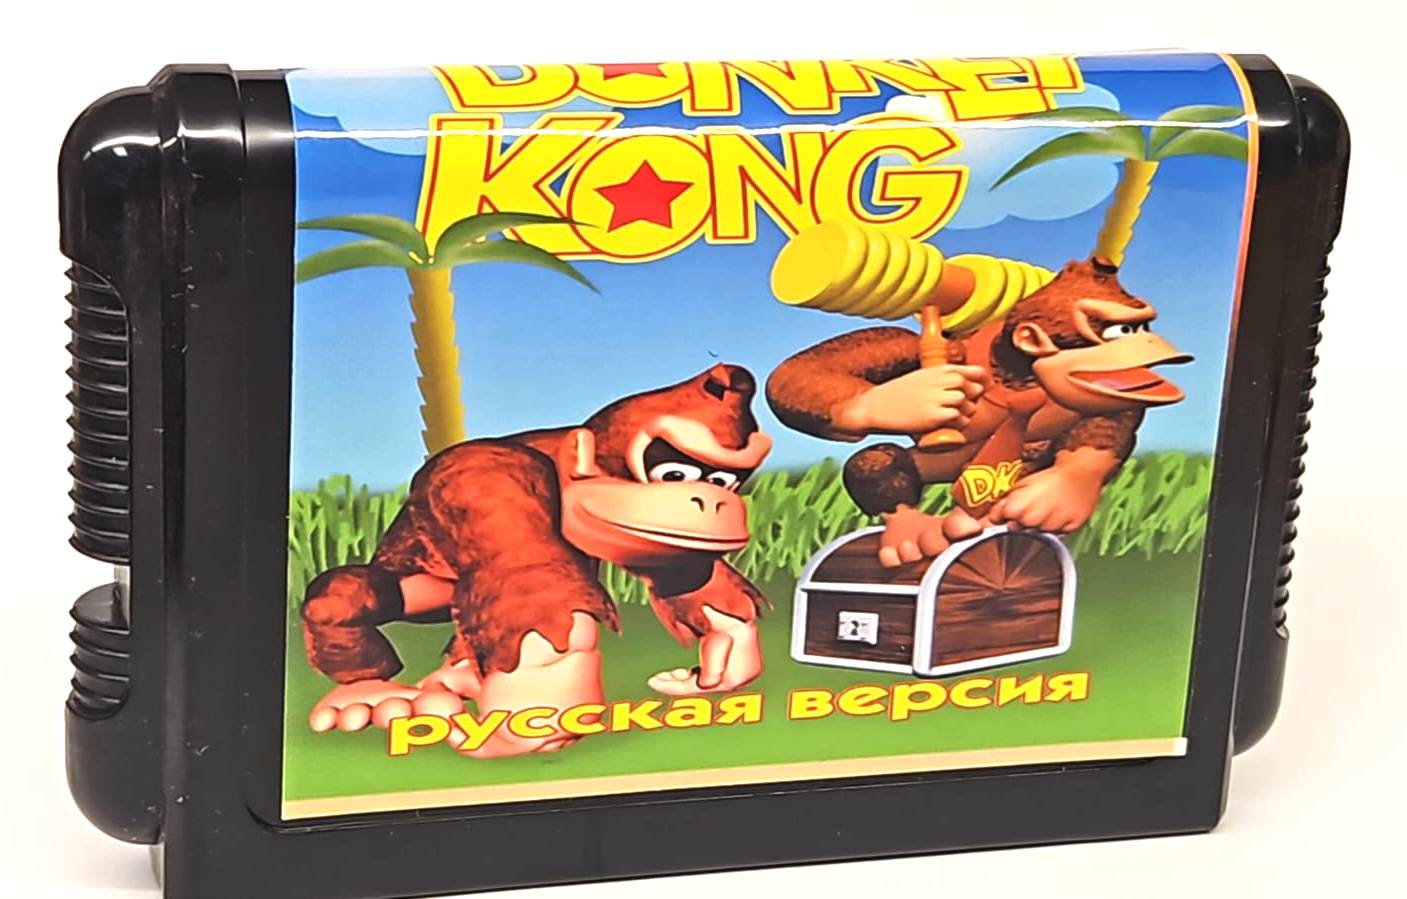   Sega Donkey Kong (Sega)